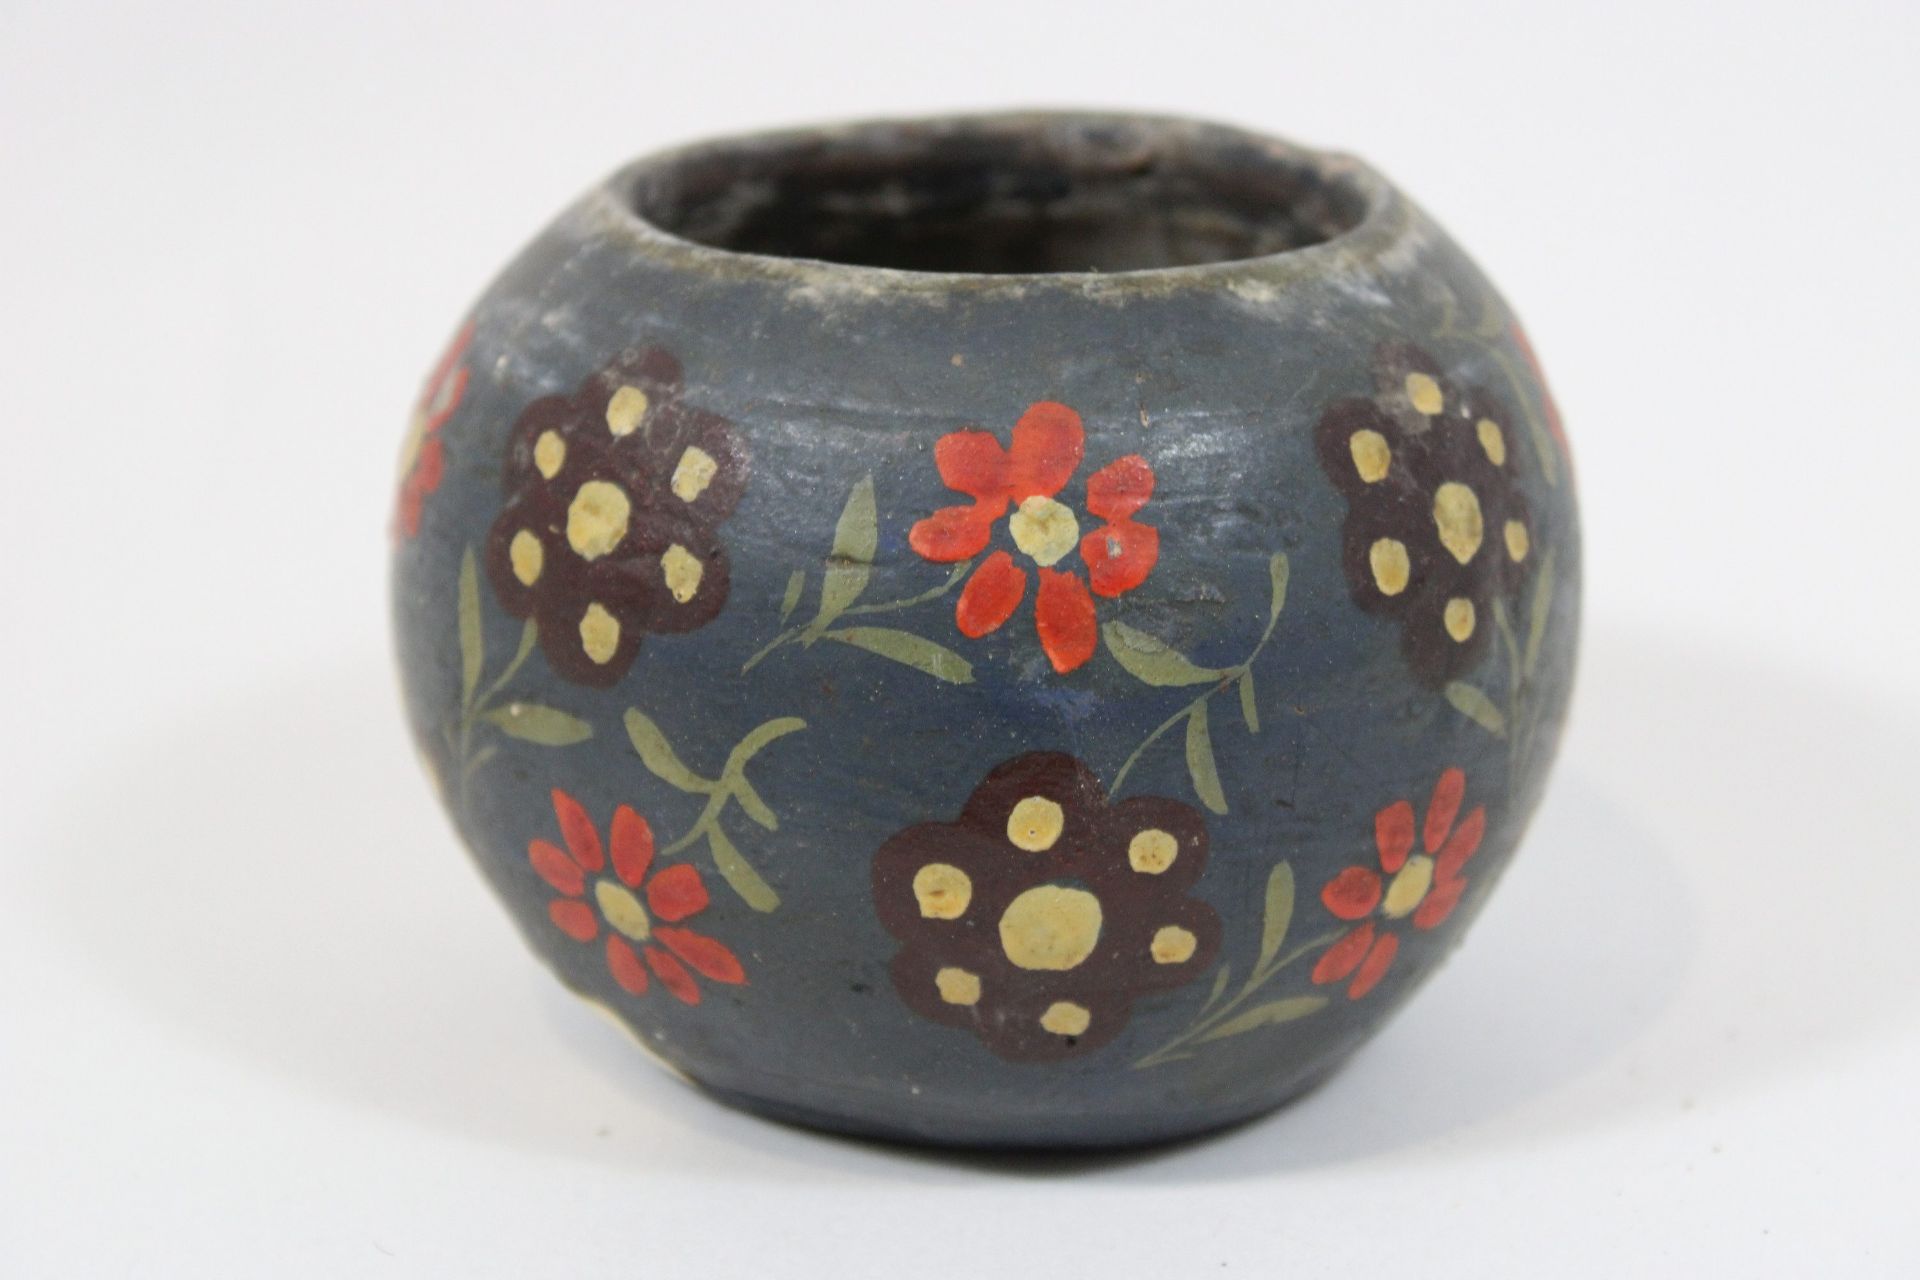 Bauchige Vase, persisch, 12.-14. Jh. - Image 2 of 2